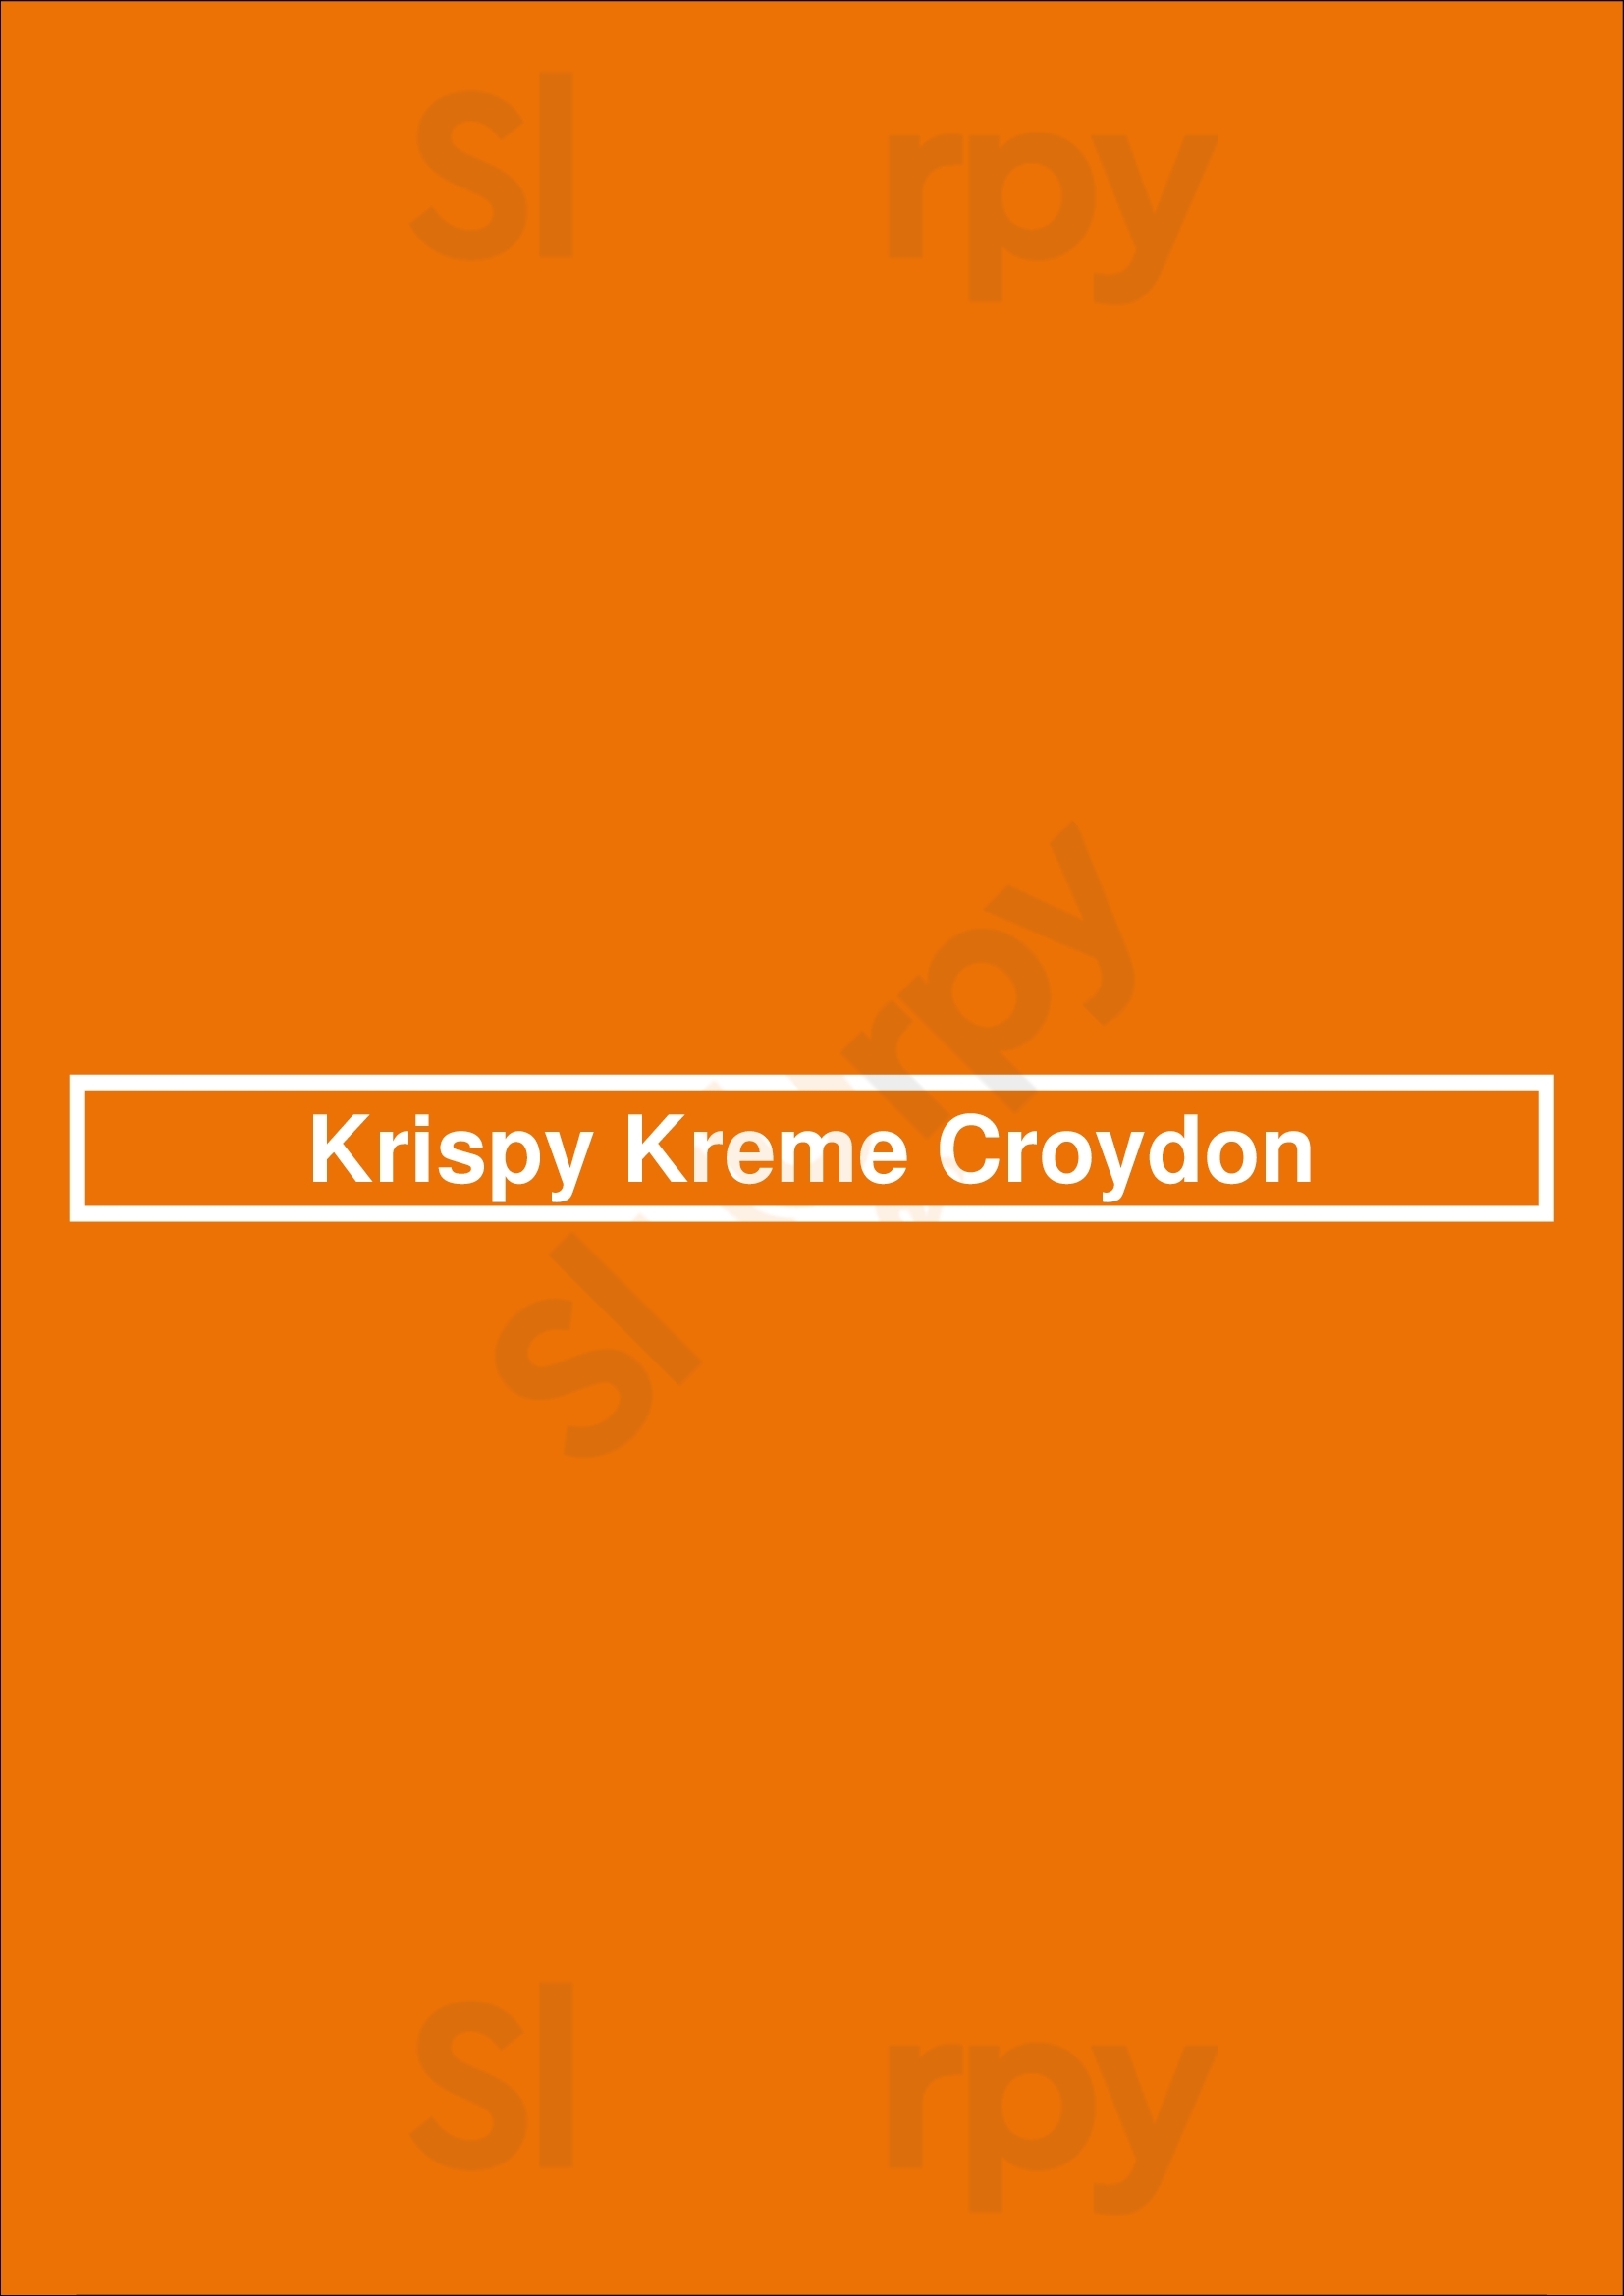 Krispy Kreme Croydon Menu - 1